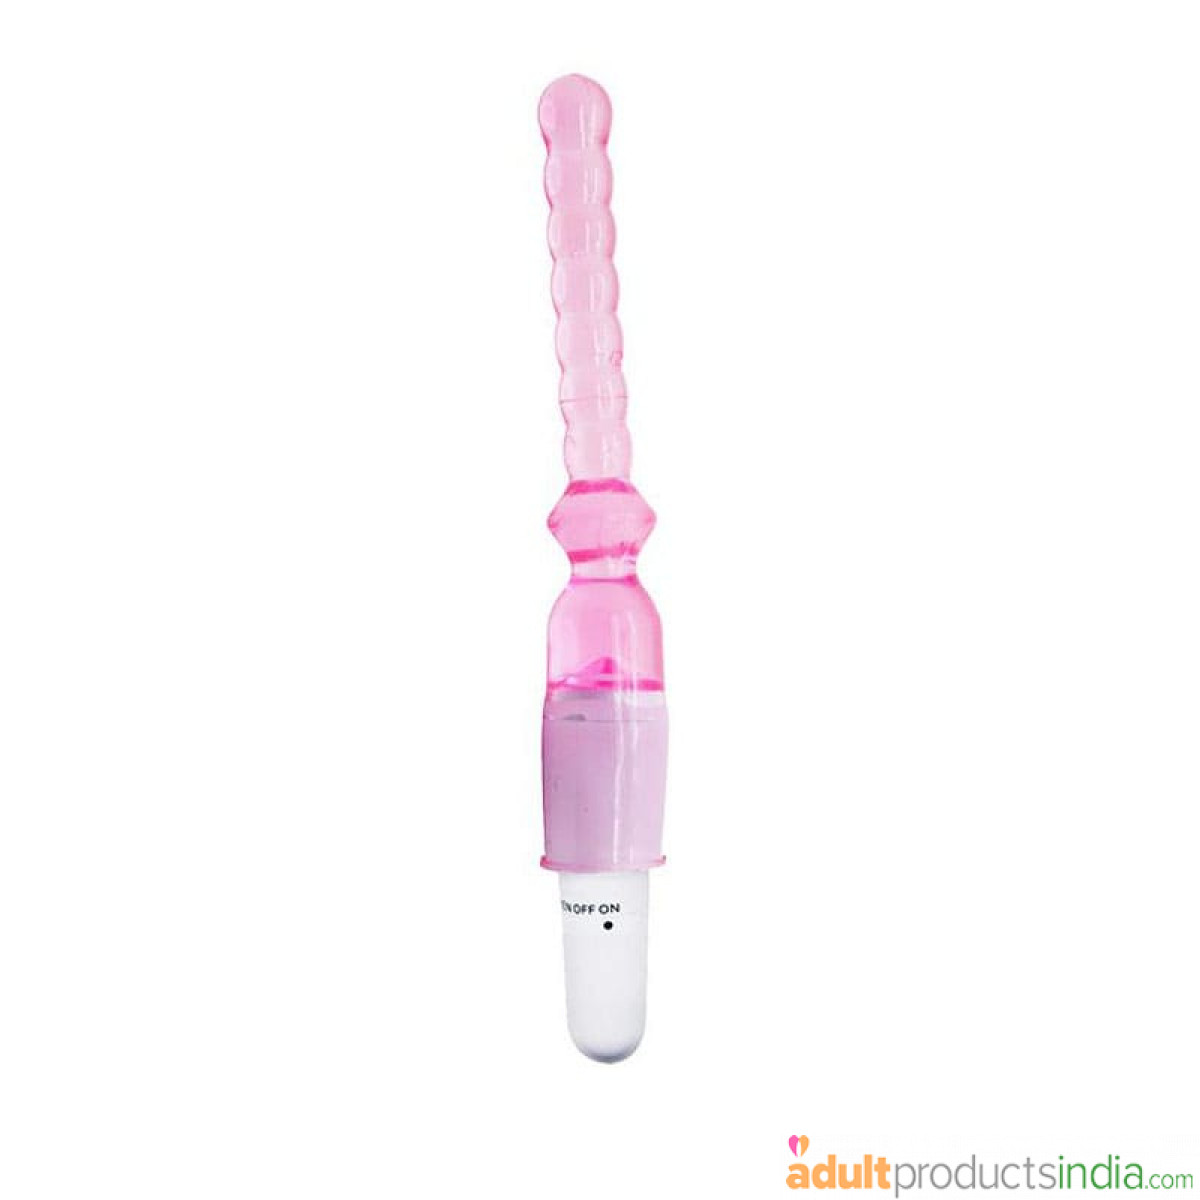 Jelly Butt Plug Vibrator - Pink